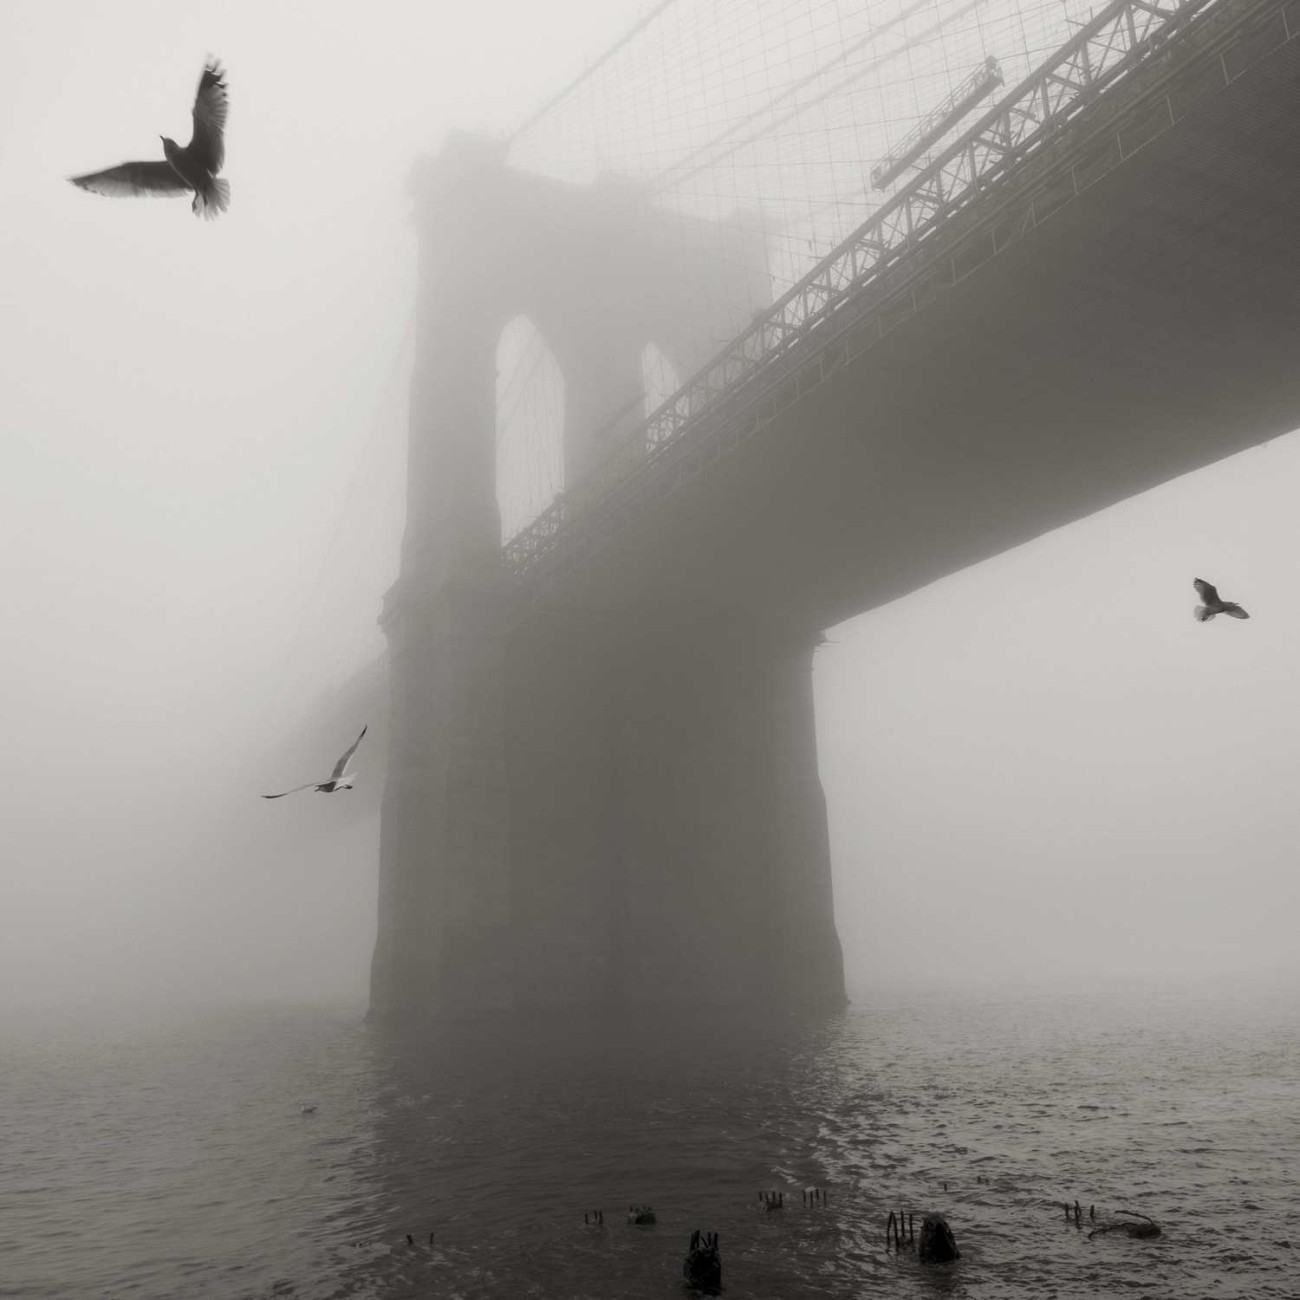 Brooklyn Bridge and gulls in fog, NY, 2014